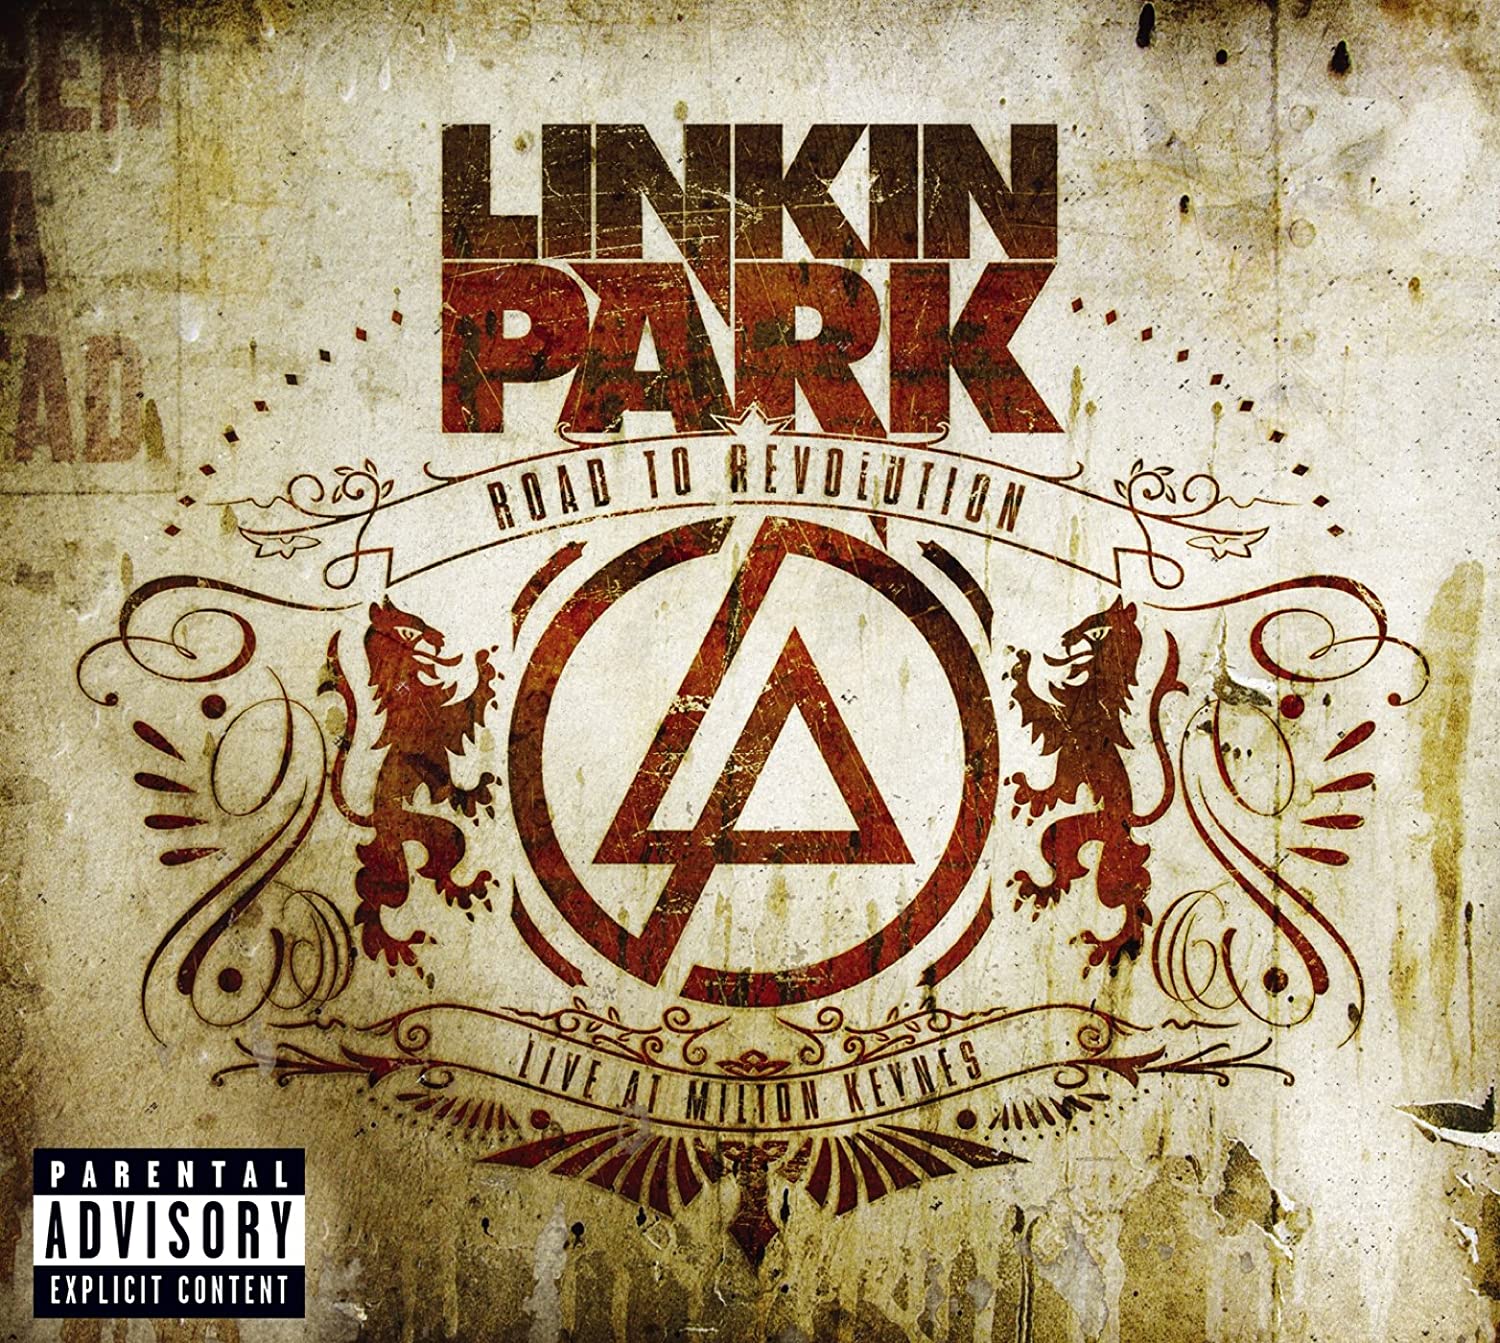 Linkin Park Road To Revolution Live At Milton Keynes CD + DVD SET